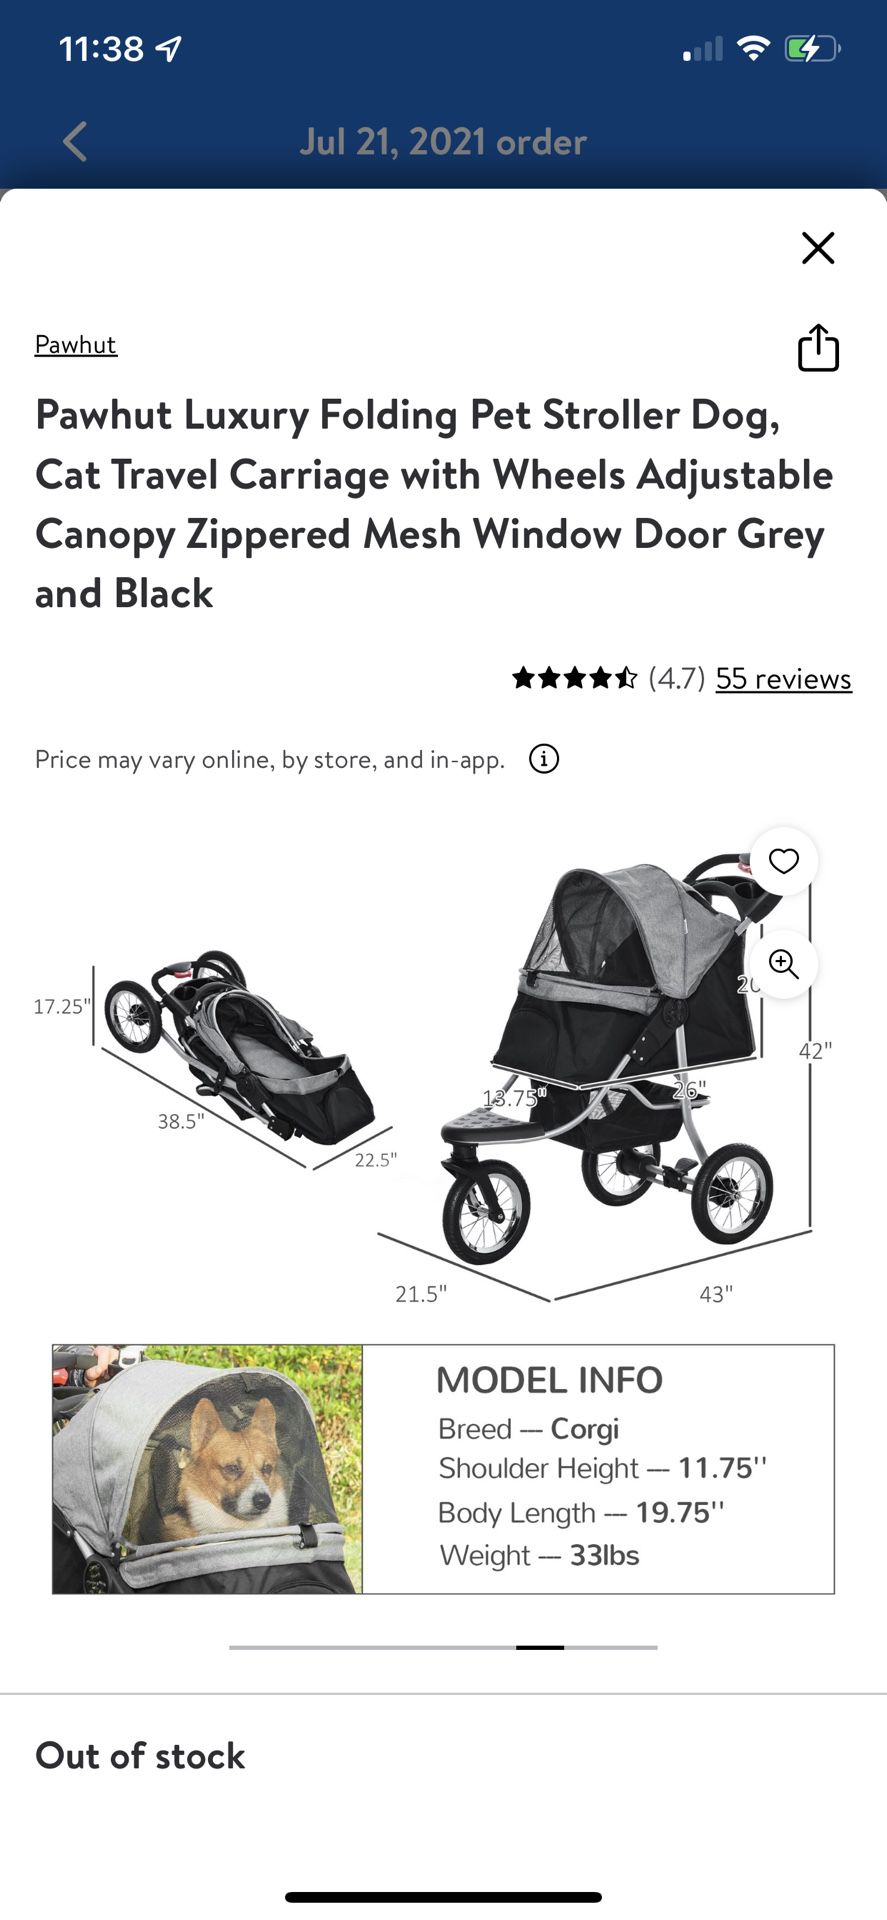 Pawhut Luxury Folding Pet Stroller Dog Cat Tralvel Carriage With Wheels Adjustable Canopy Zippered Mesh Window Door Grey And Black